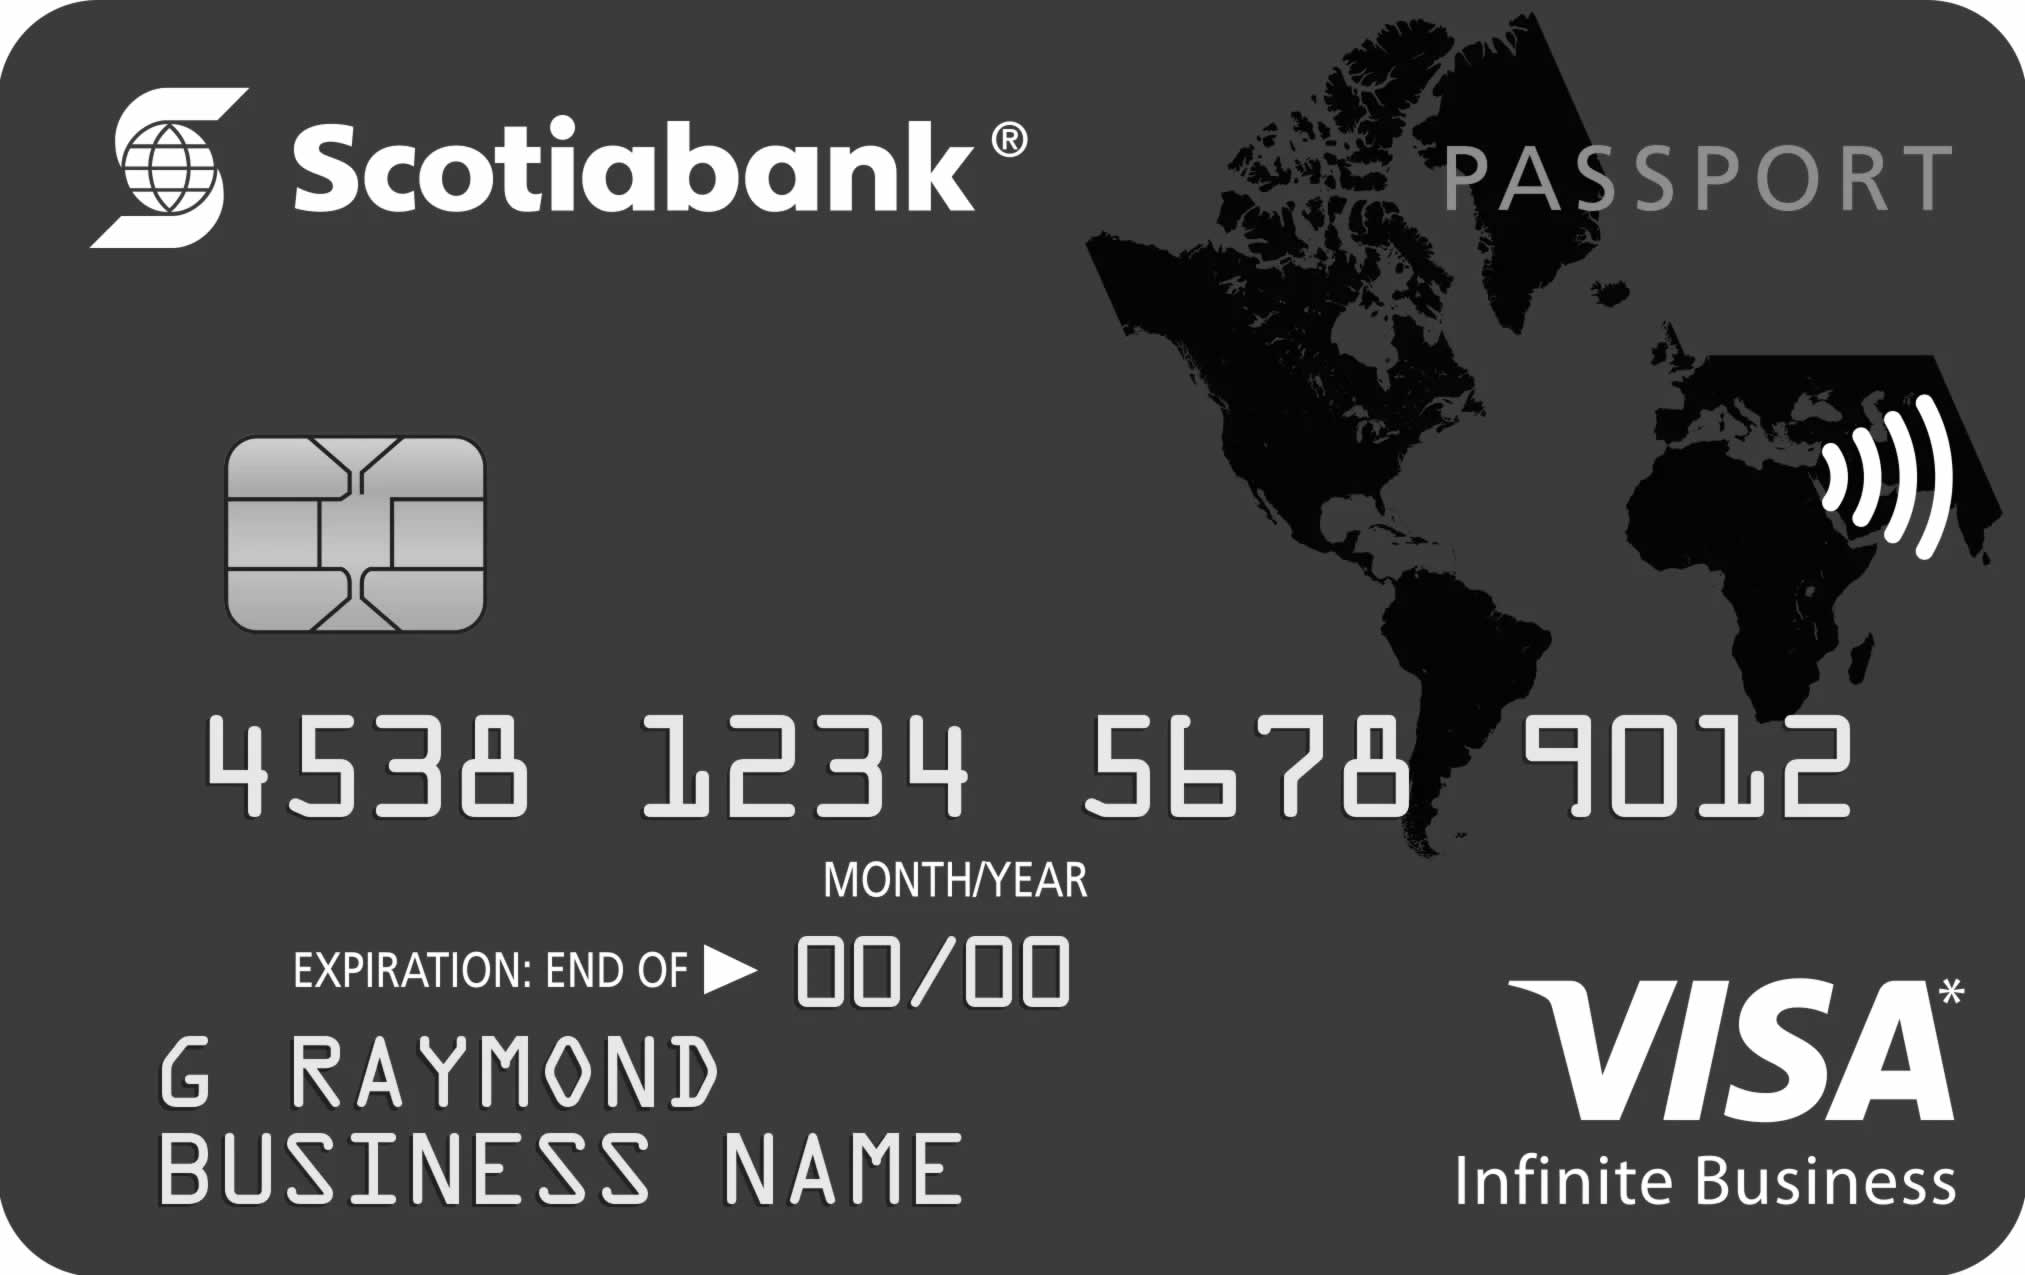 Scotiabank Passport Visa Infinite Business card